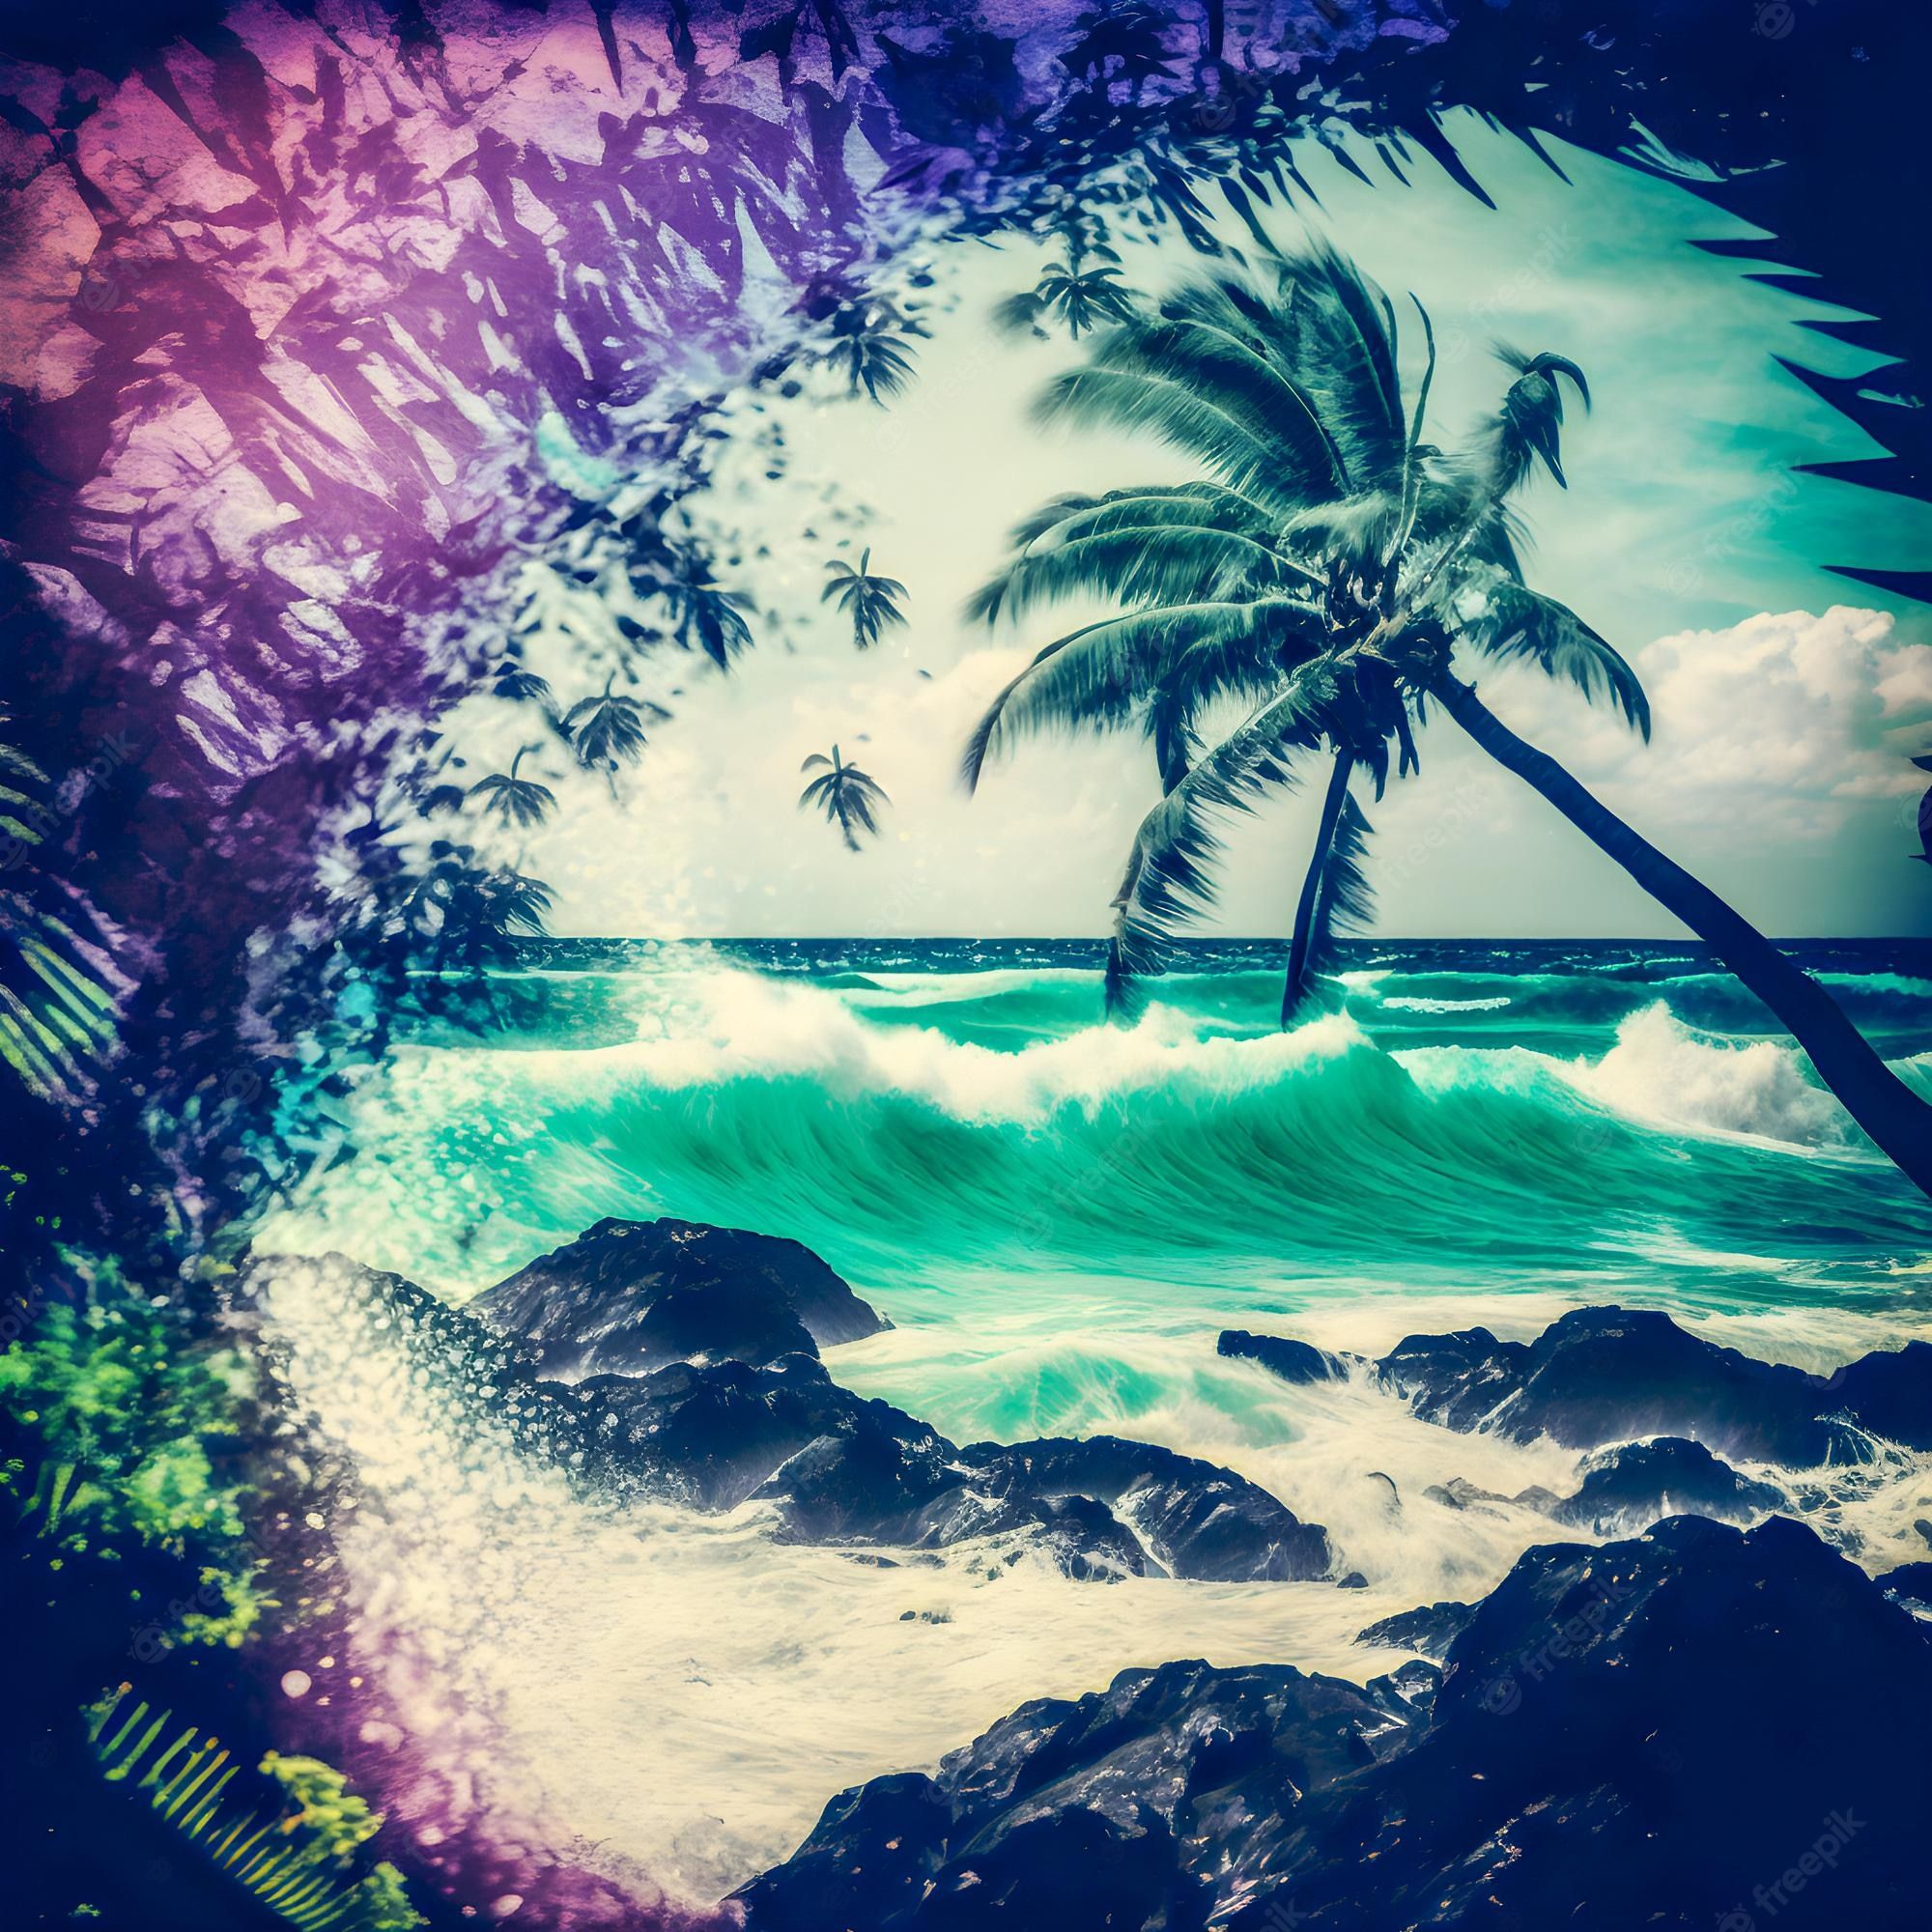 Premium Photo. Hawaii palm tree and ocean waves illustartion